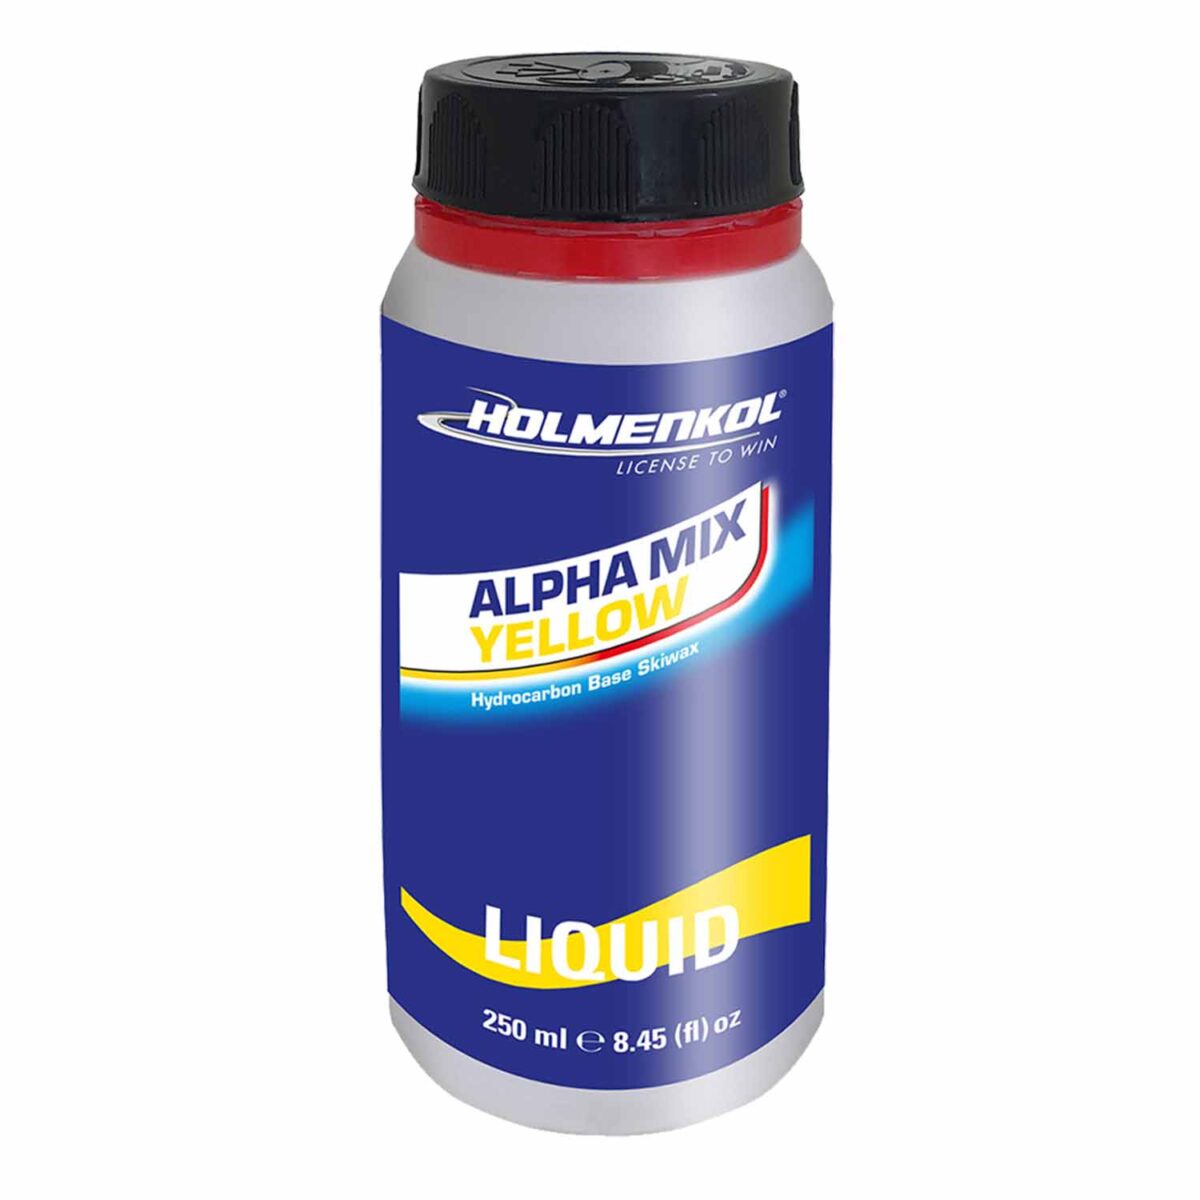 Holmenkol Alphamix Yellow liquid, 250ml